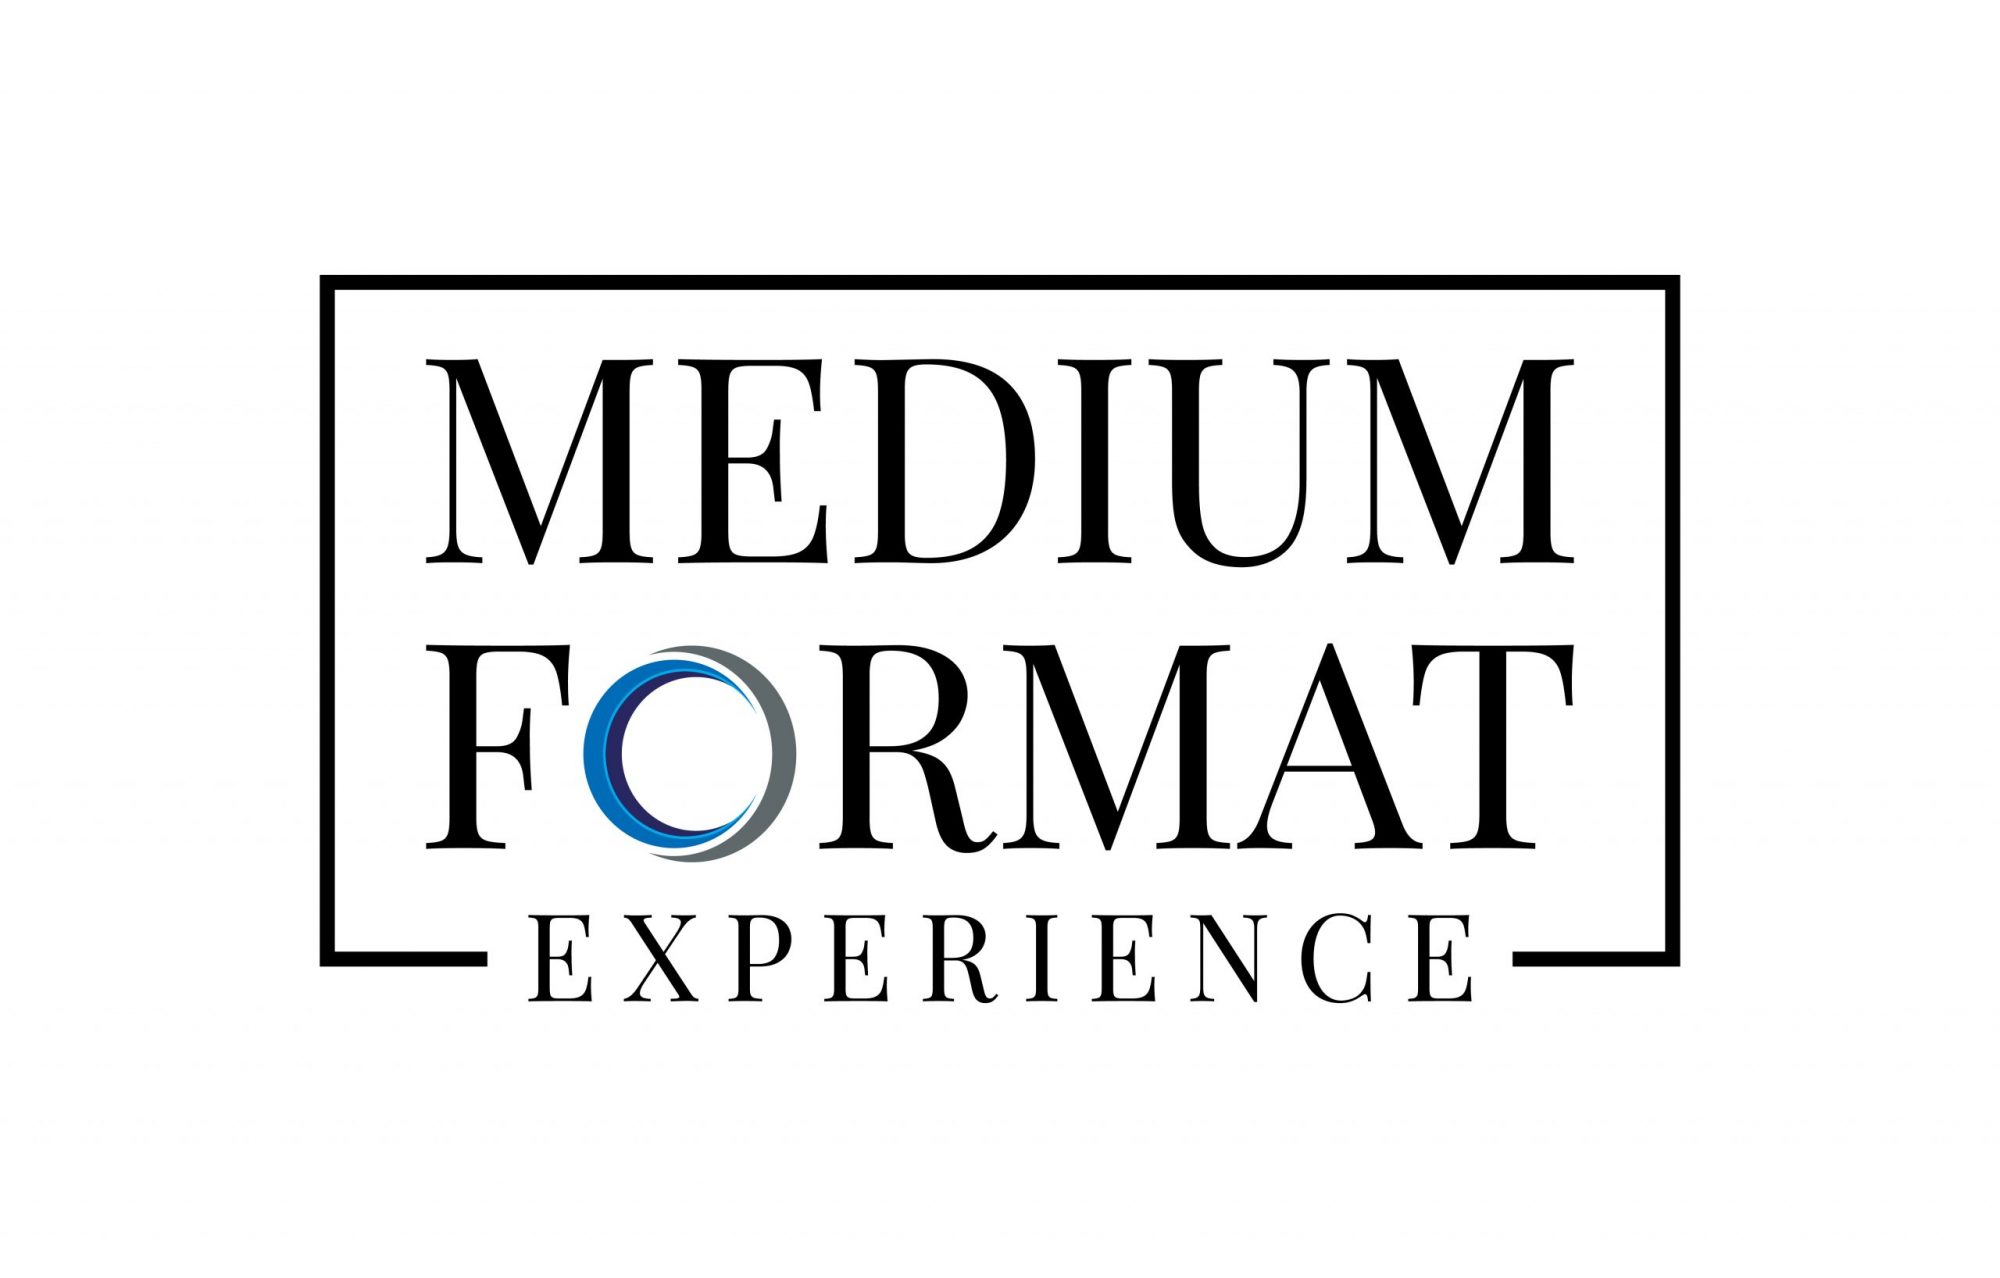 The Medium Format Experience